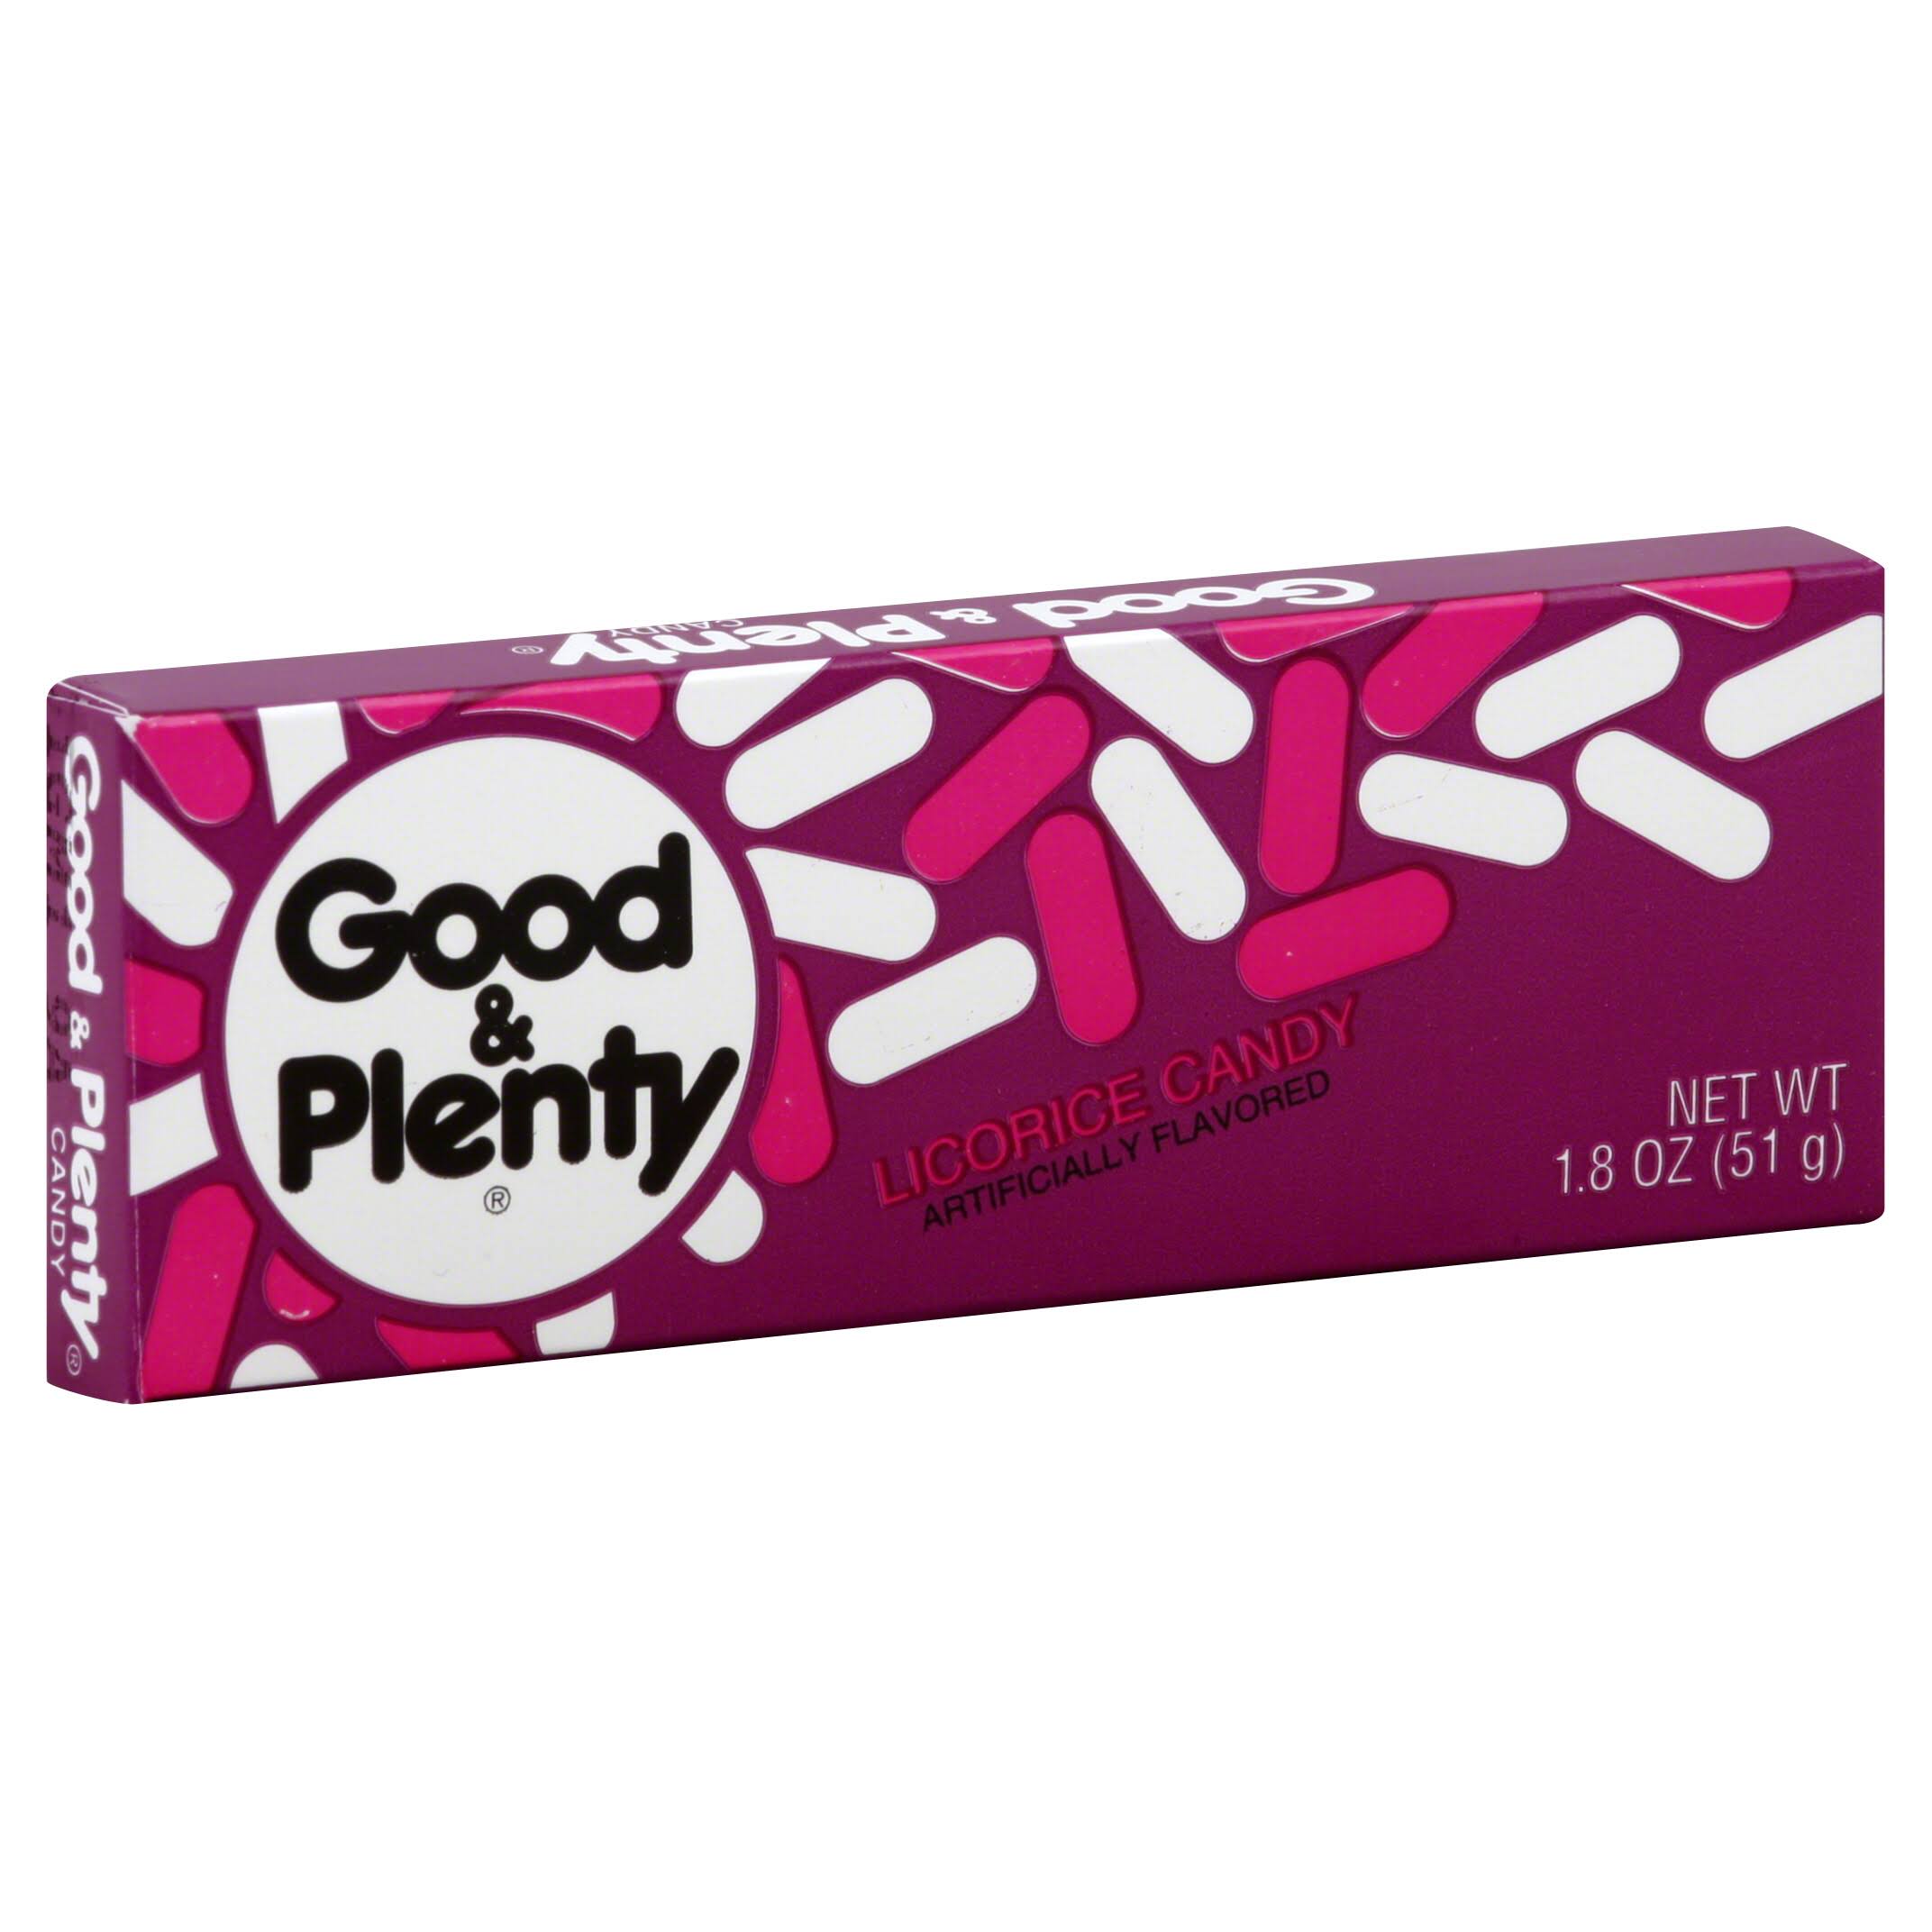 Hershey Good 'n Plenty Candy Licorice - 1.8oz